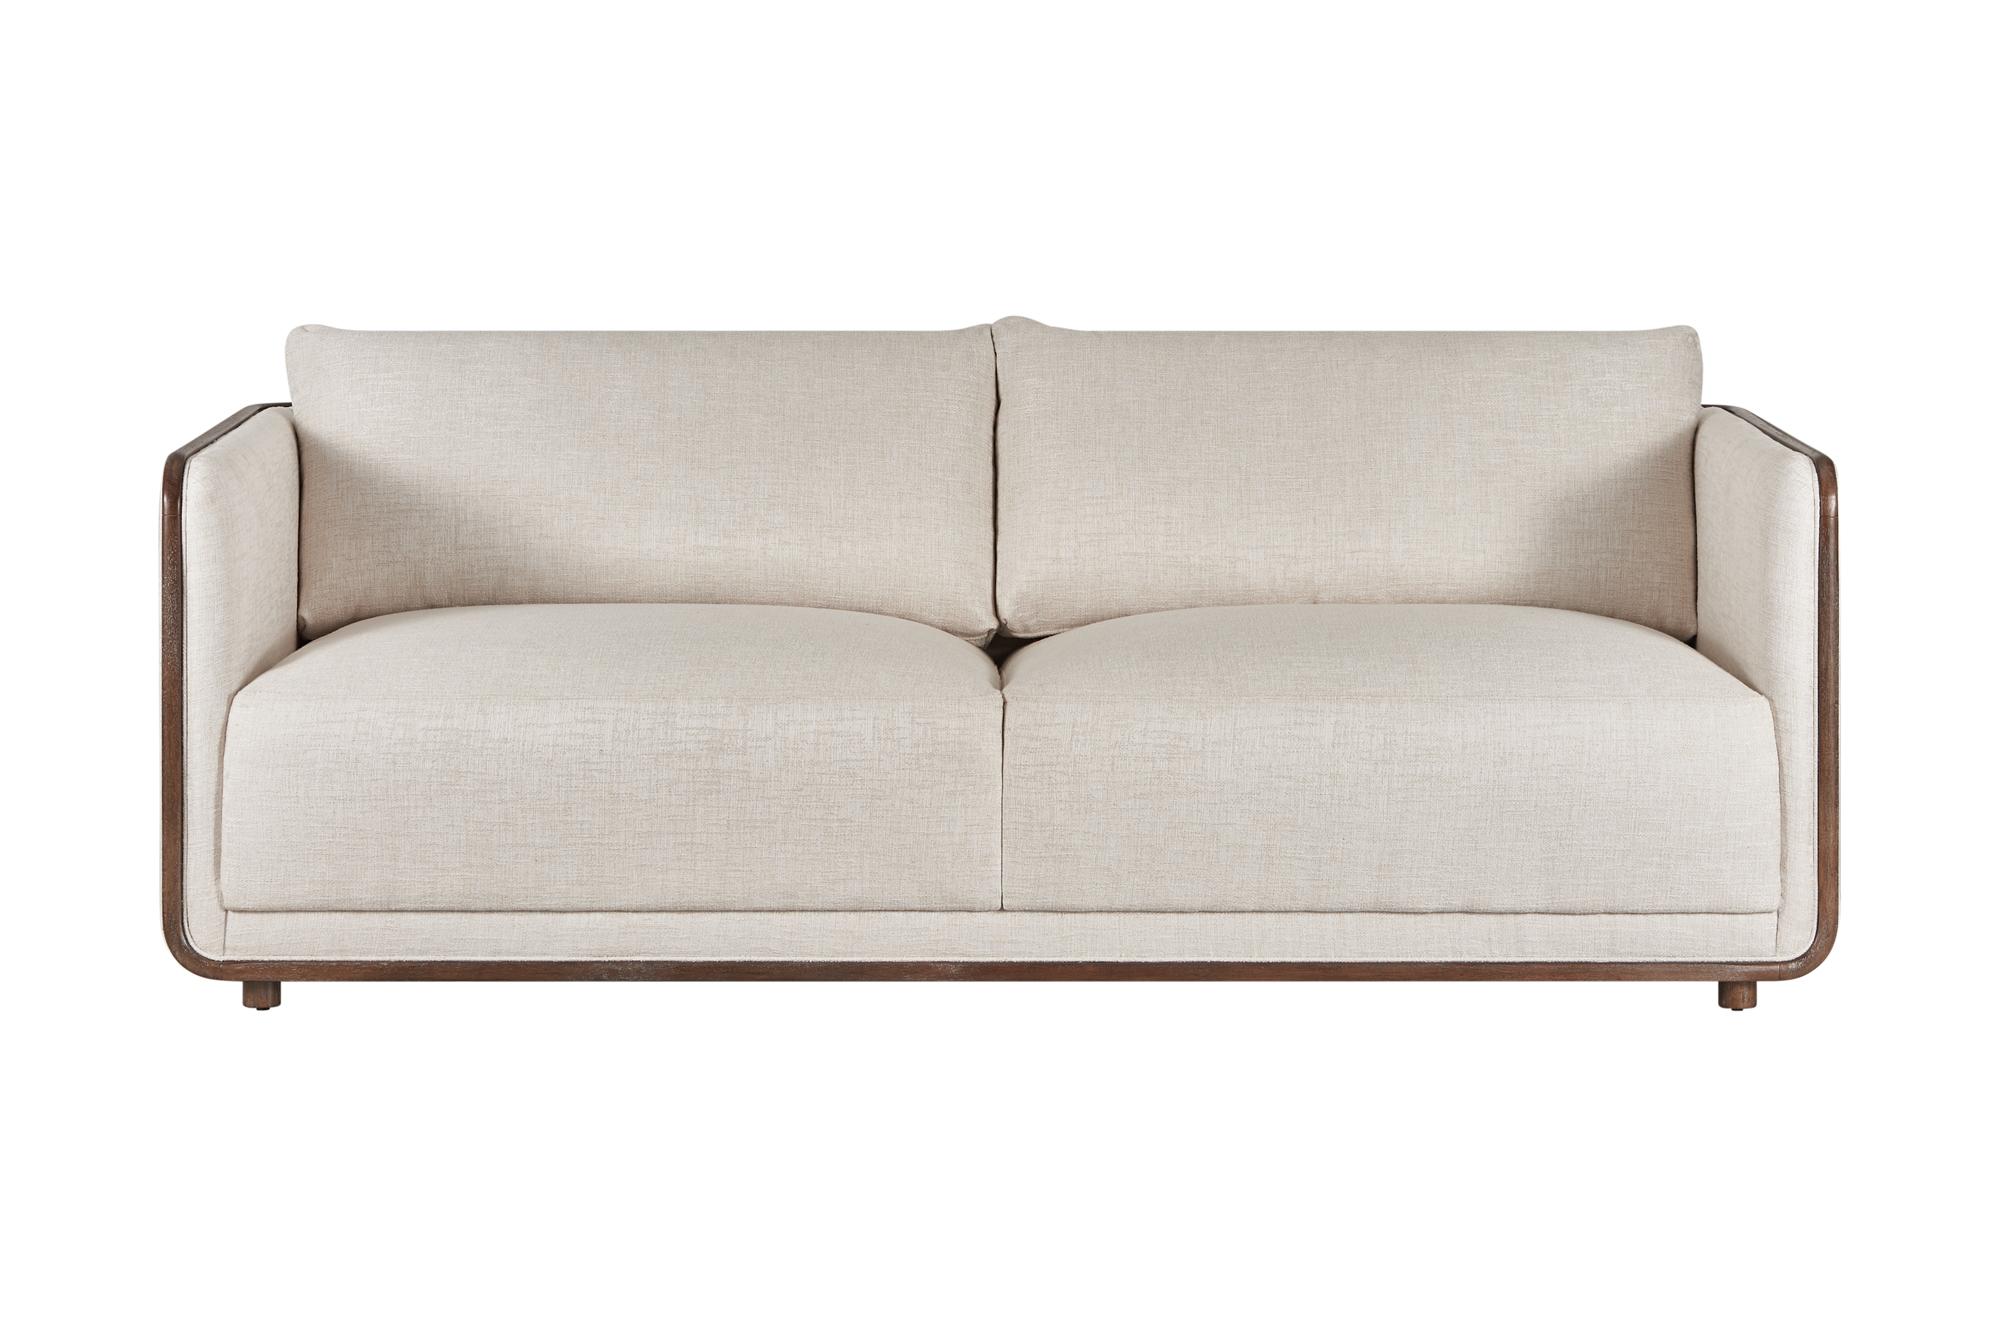 Contemporary, Modern, Casual Sofa Sagrada 764501-5303 764501-5303 in Ivory Fabric